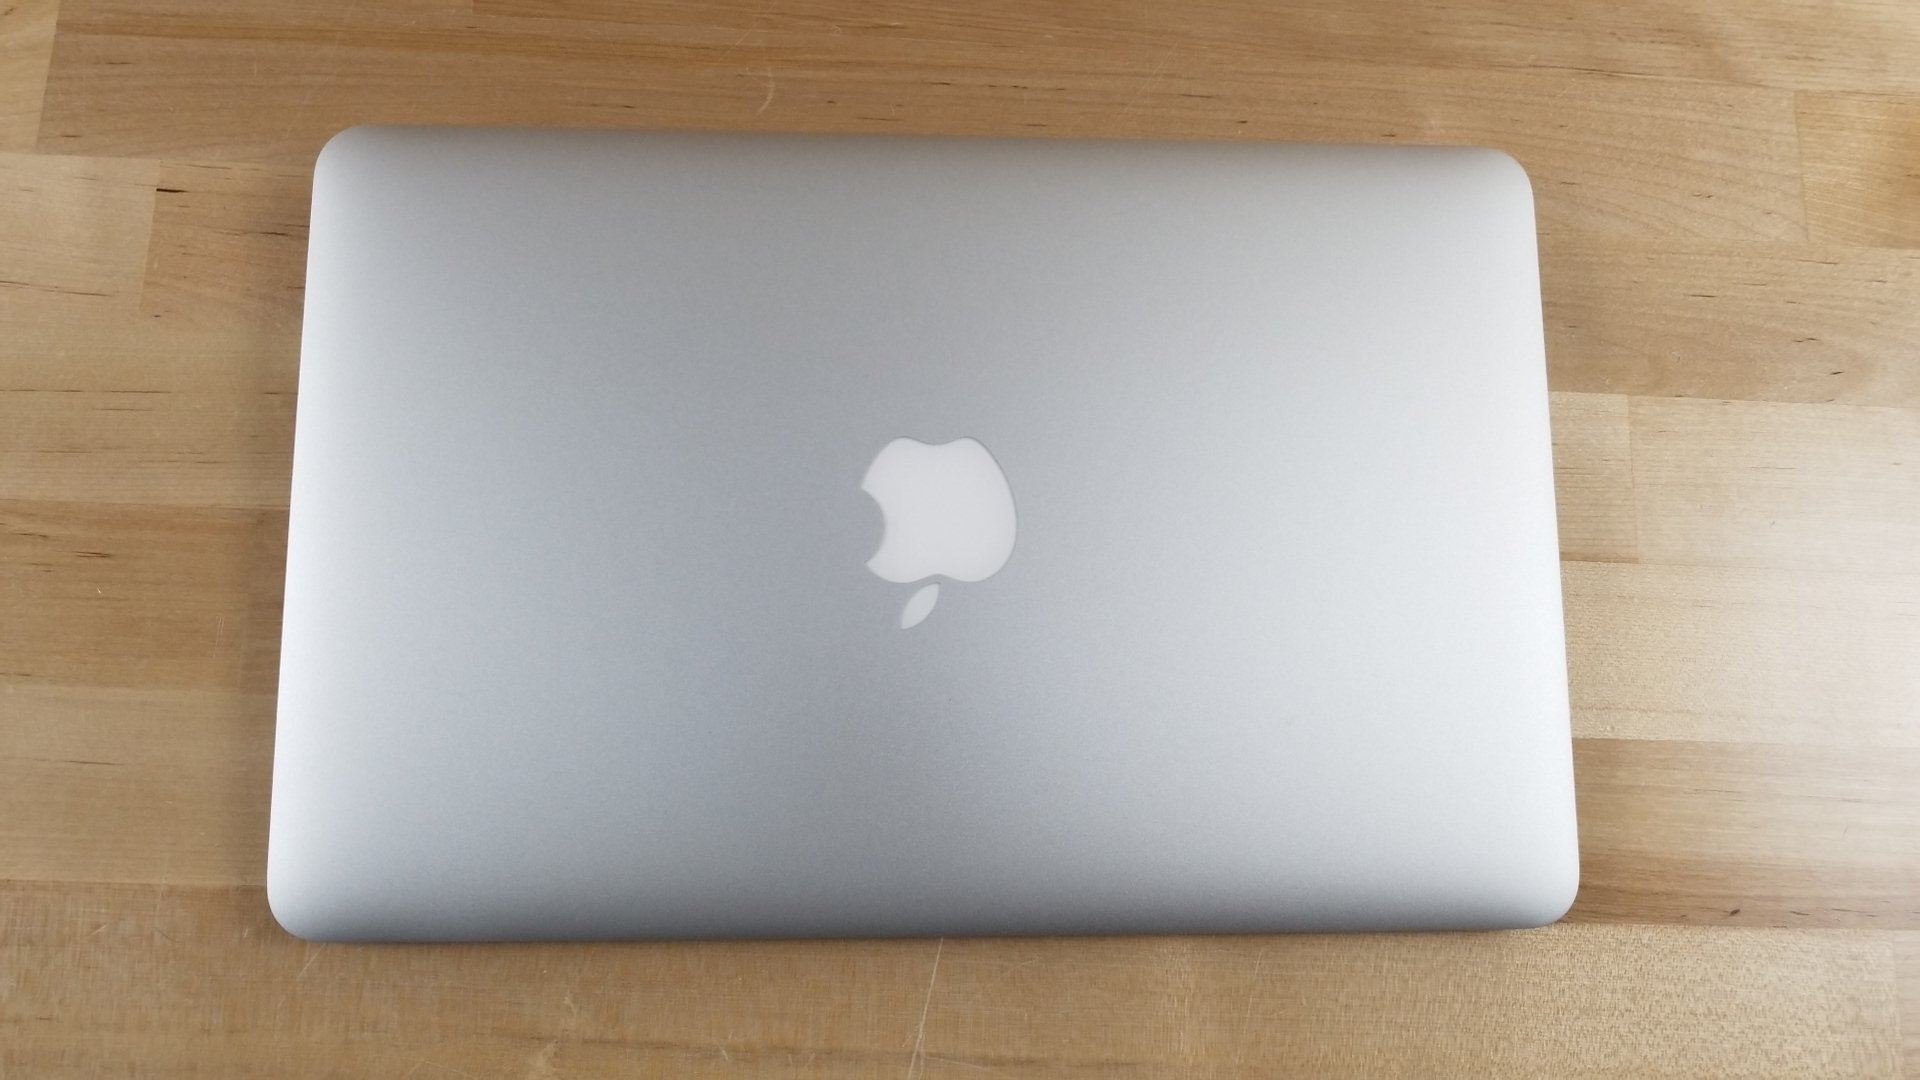 Apple MacBook Air (11-inch Mid 2013) 1.3 GHz Intel core i5 128GB SSD